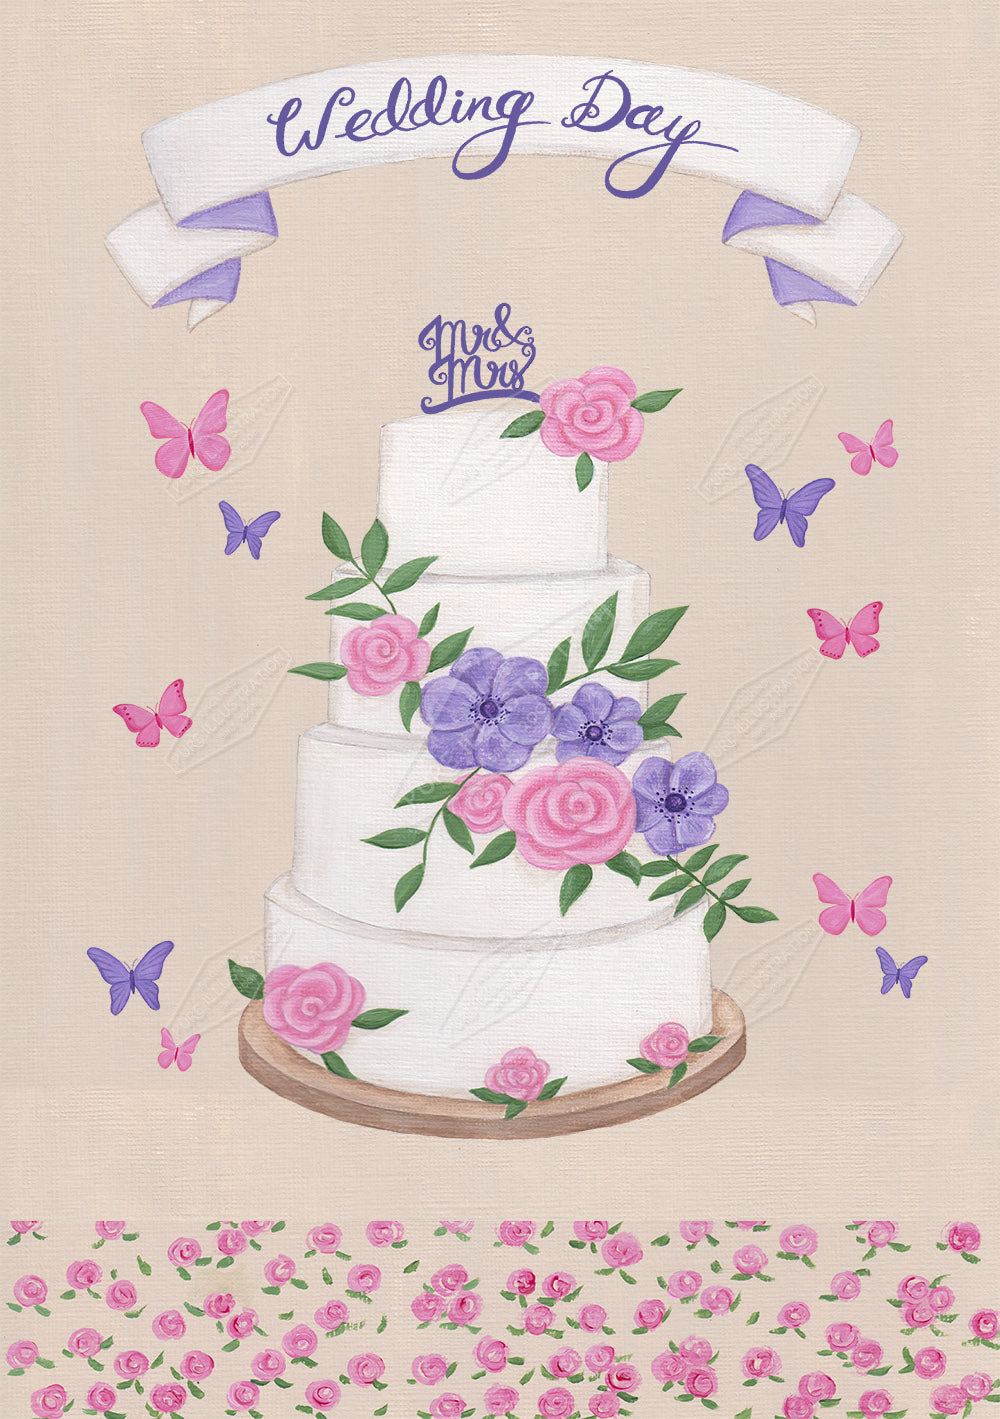 00028965AAI - Wedding Cake by Anna Aitken - Pure Art Licensing Agency